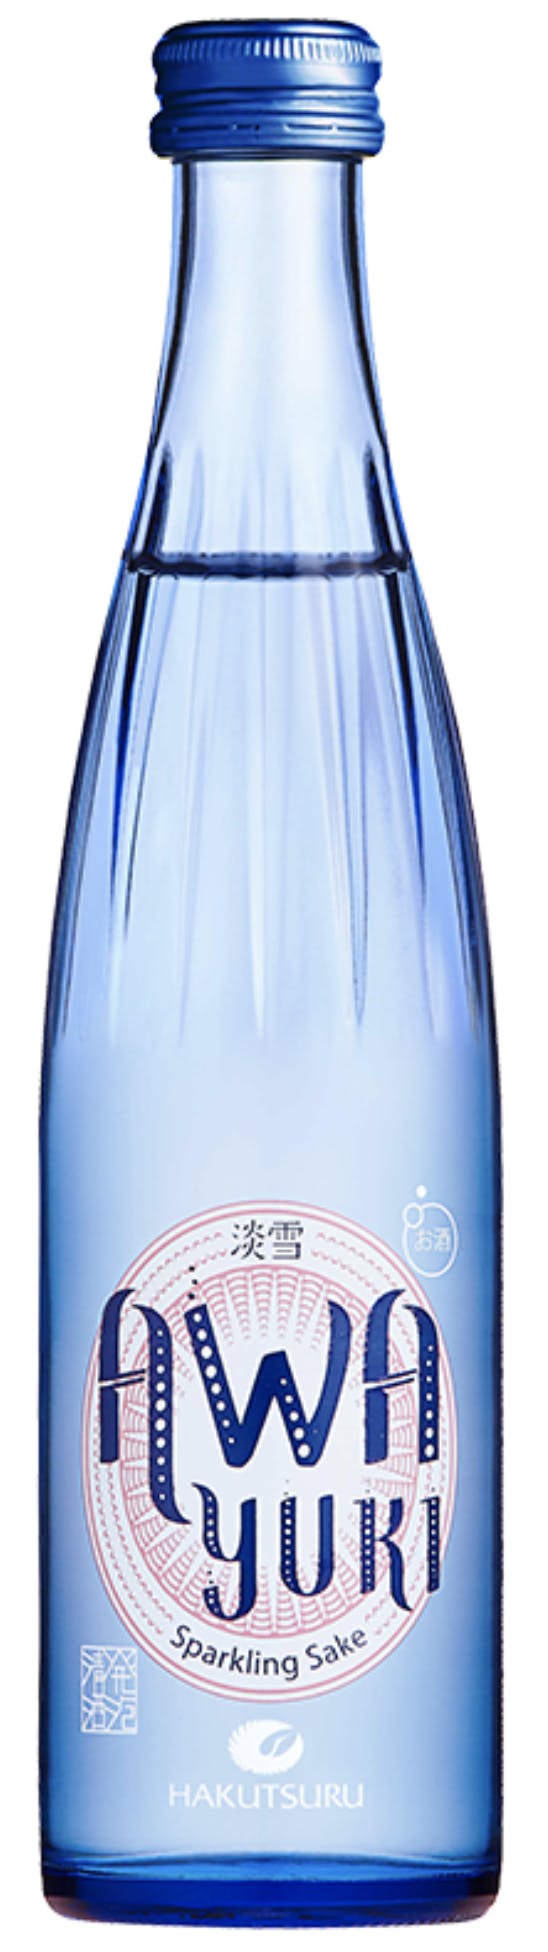 Hakutsuru -  Awa Yuki Sparkling (Sake di riso giapponese) 5,5% - 300ml